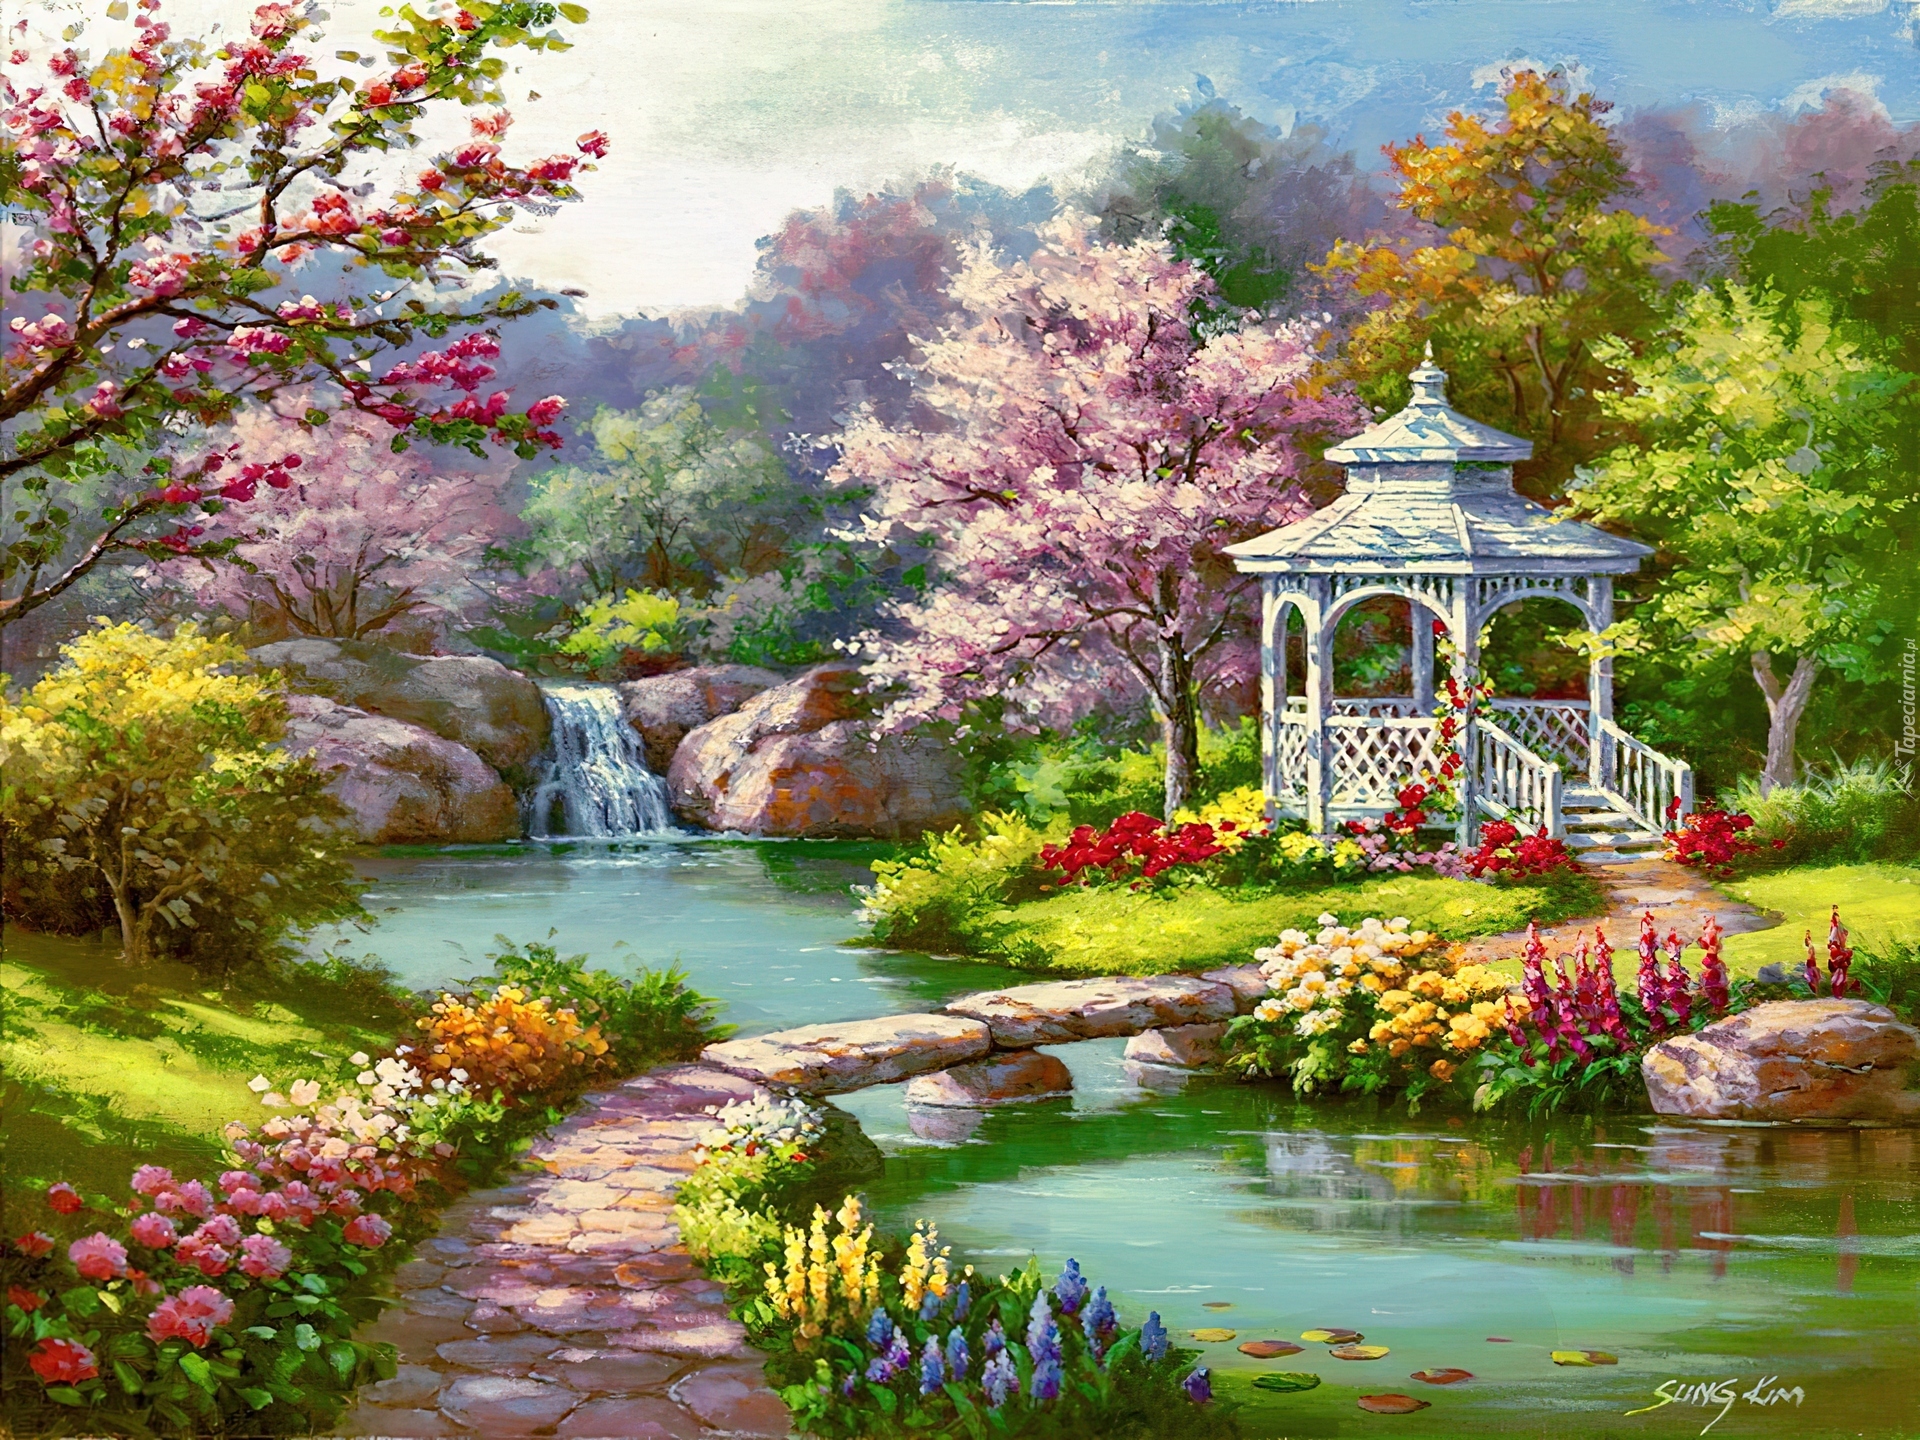 gazebo in spring park ~ Sung Kim, artist | Garden painting, Landscape